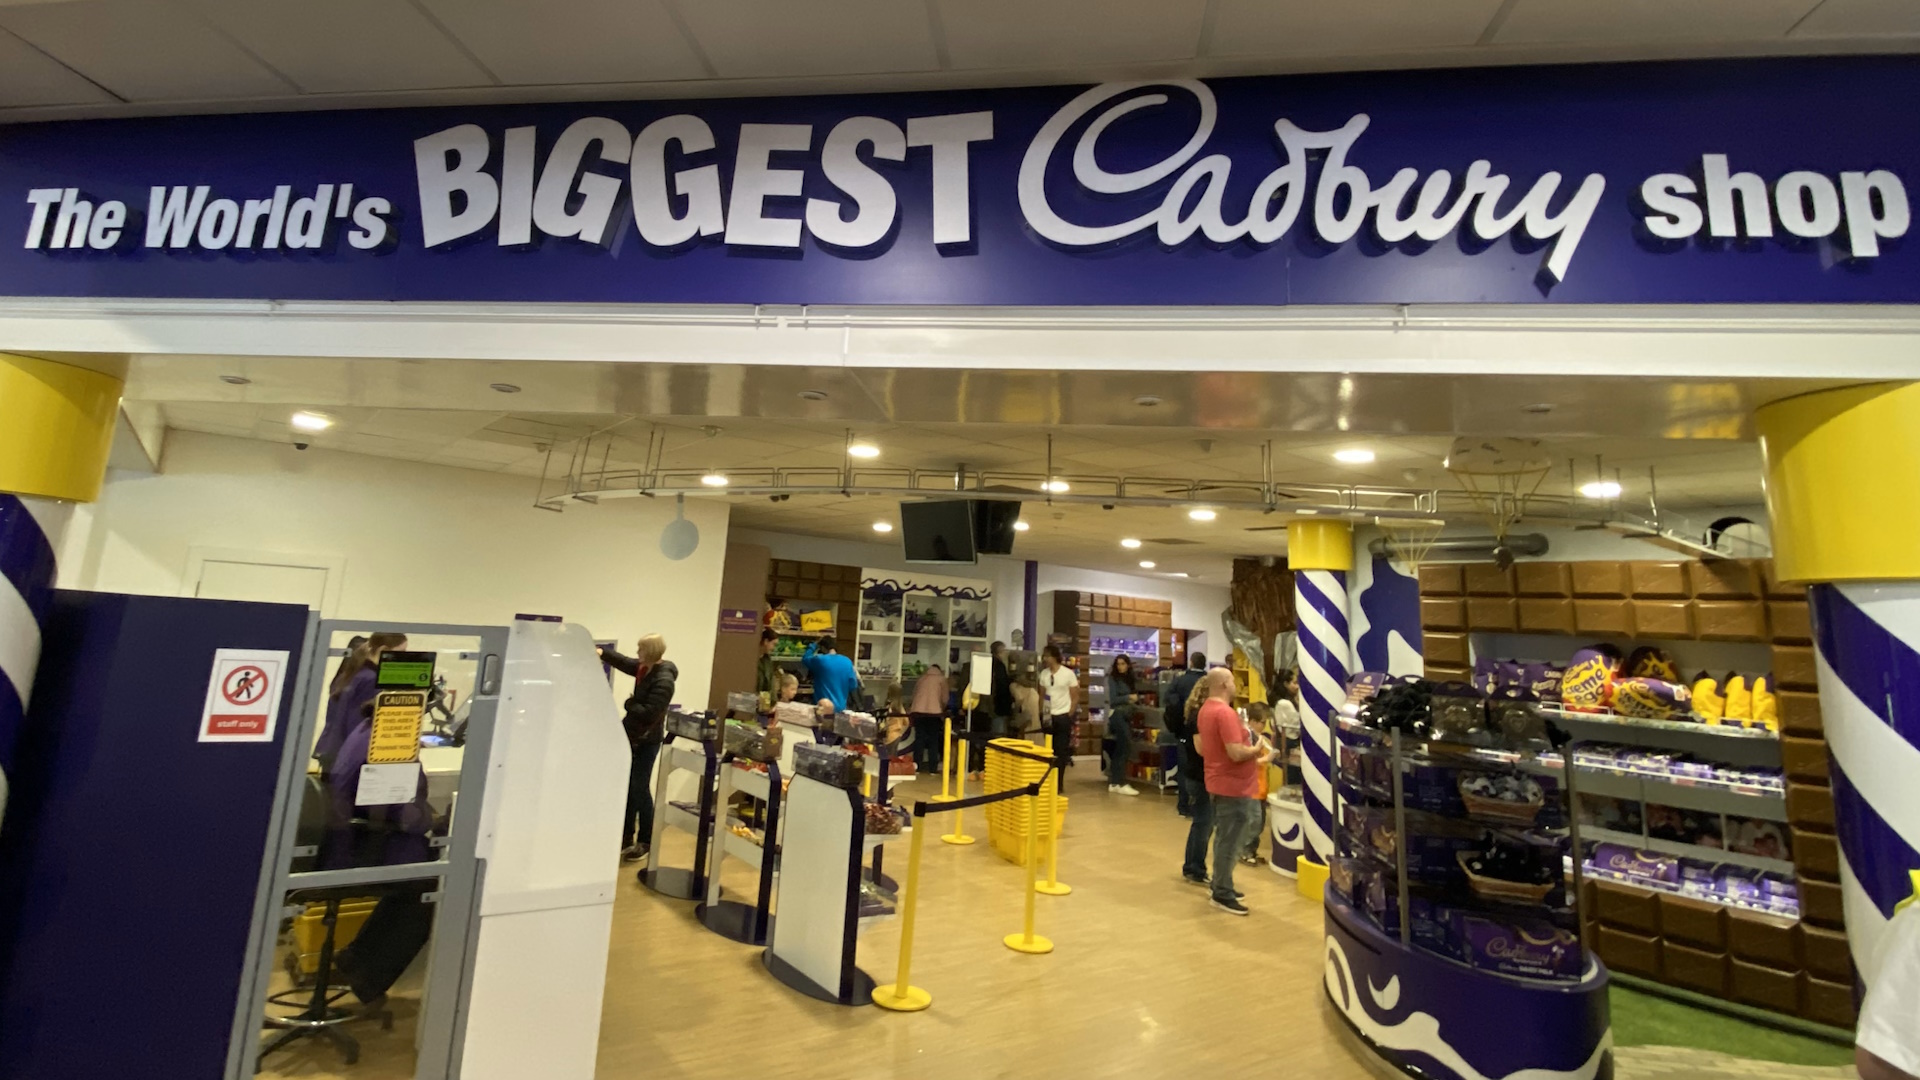 Cadbury World - The Worlds Biggest Cadbury Shop